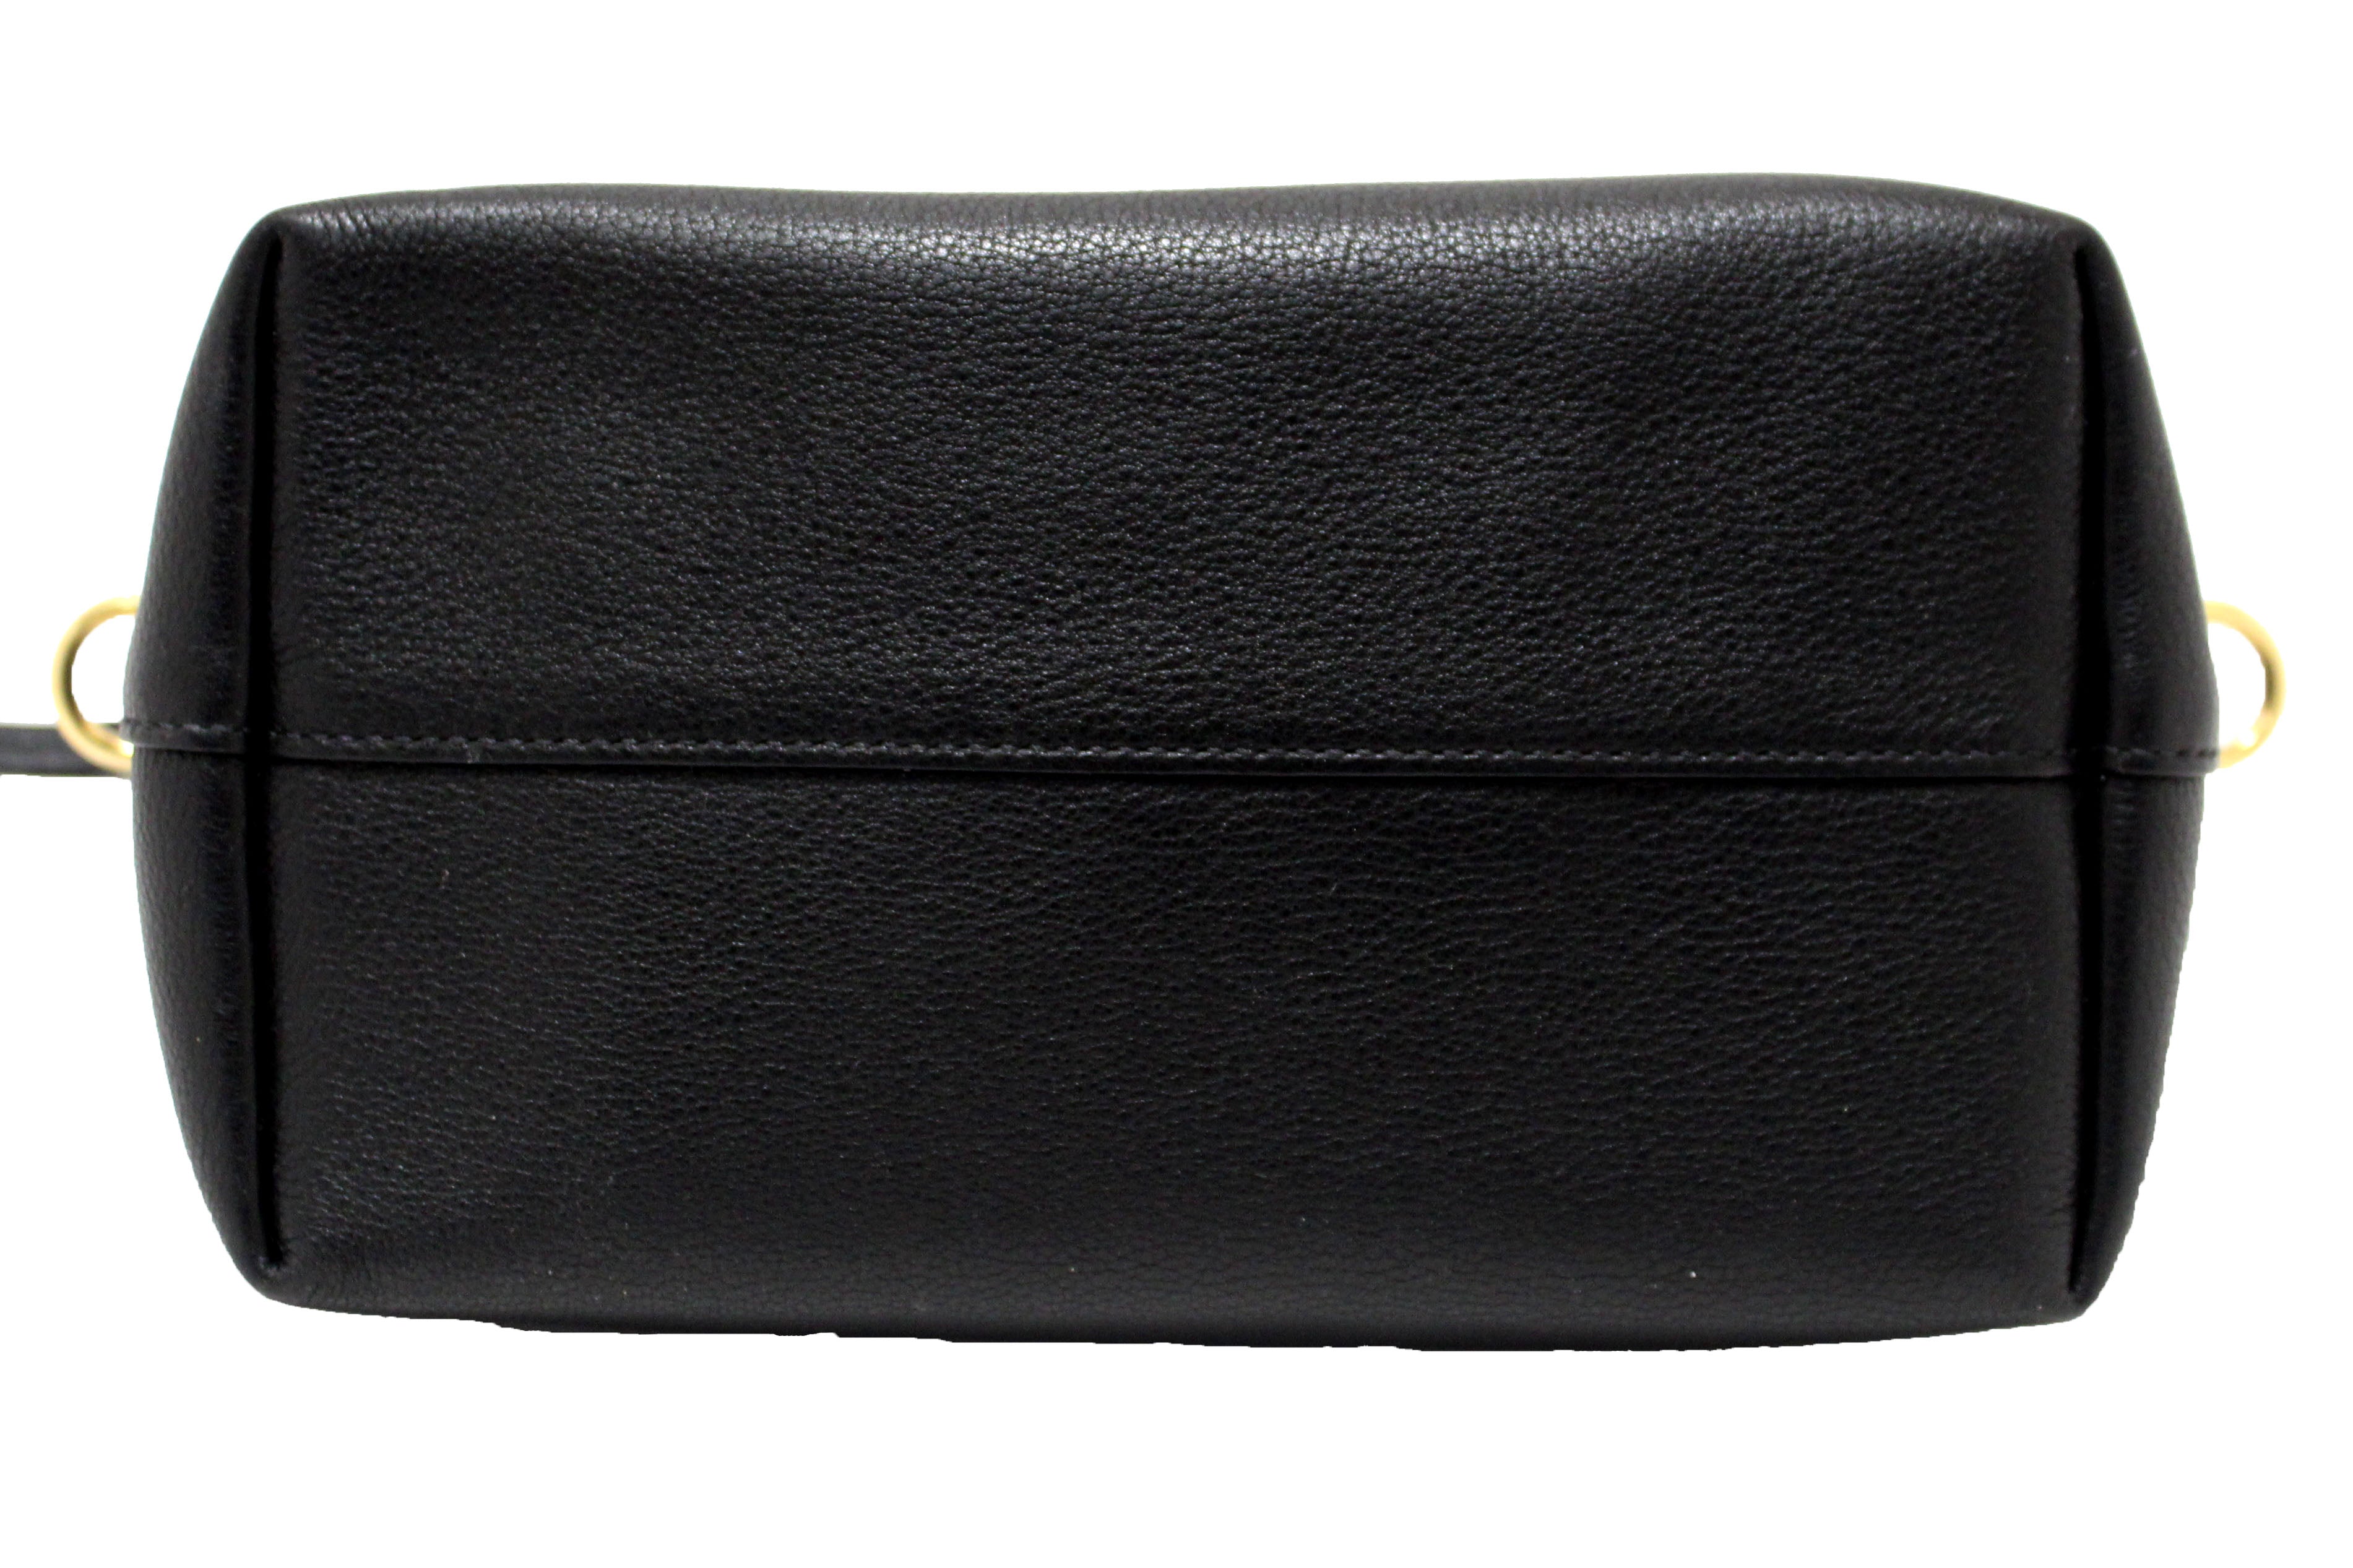 Authentic Prada Black Soft Leather Small Zipper Tote Bag